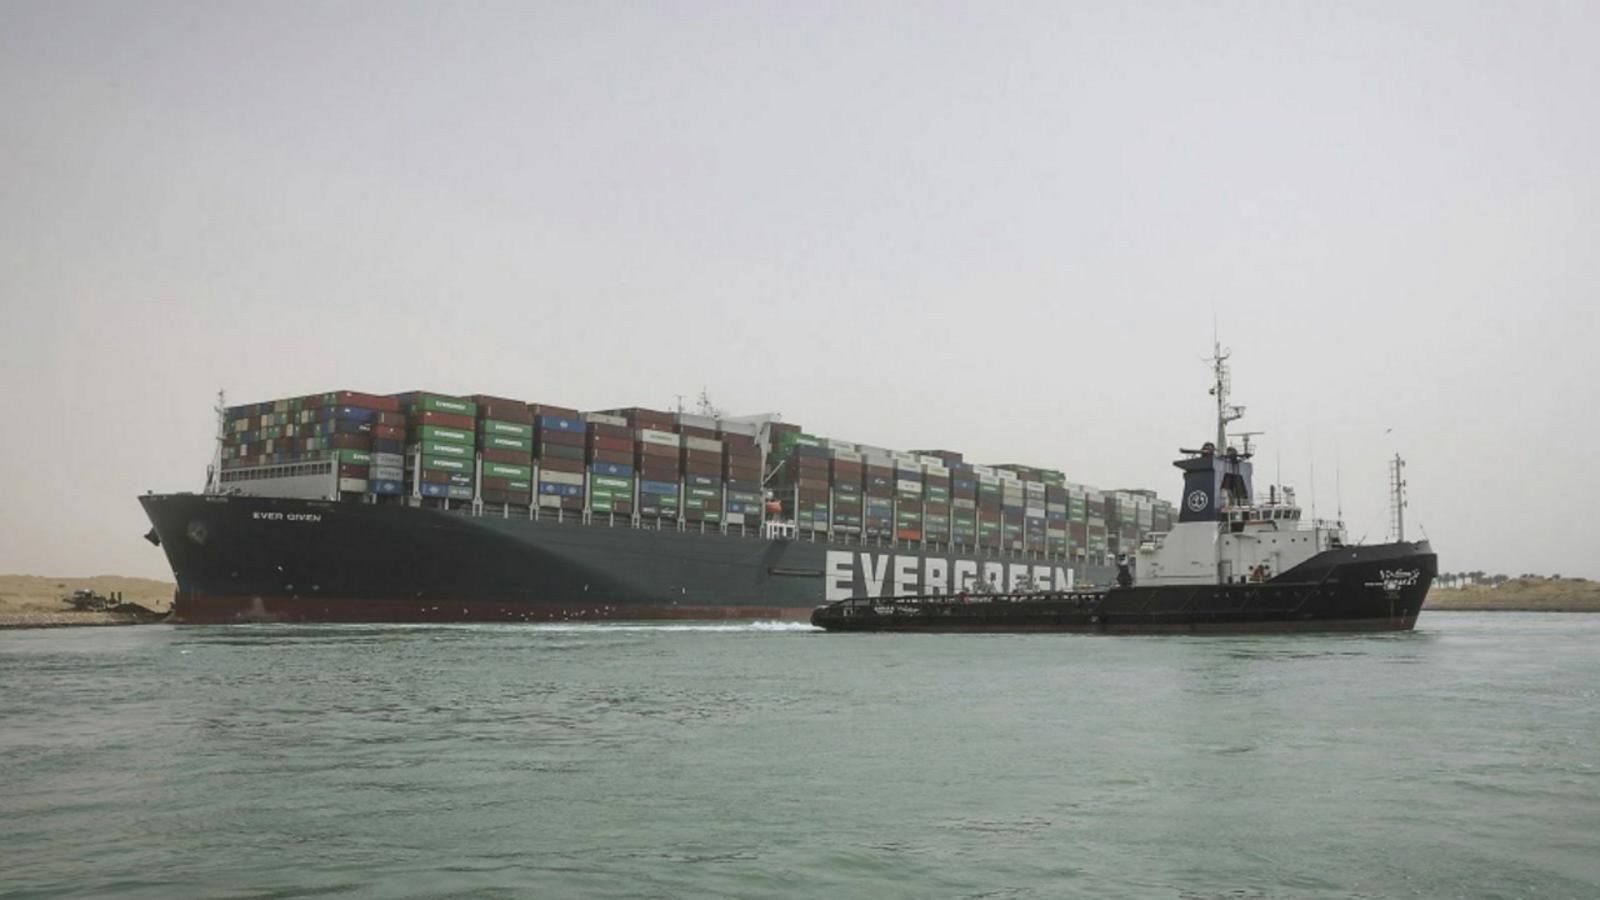 Massive cargo ship blocks world trade at Suez Canal - Good Morning America